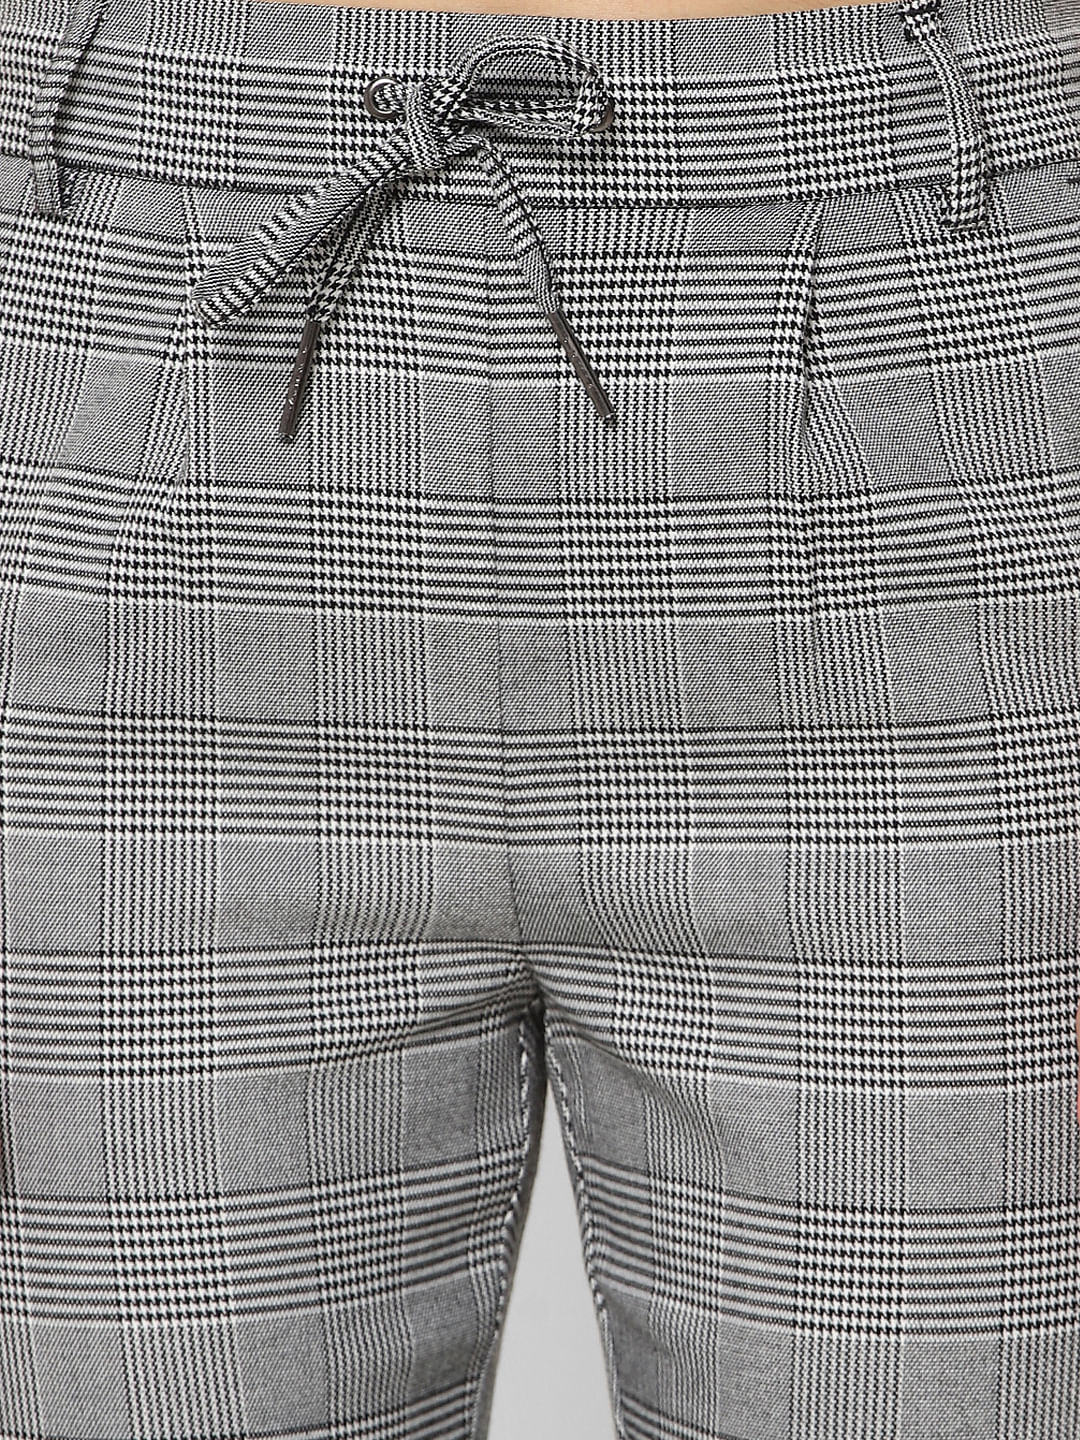 Buy Women Multi Check Formal Regular Fit Trousers Online  718115  Van  Heusen